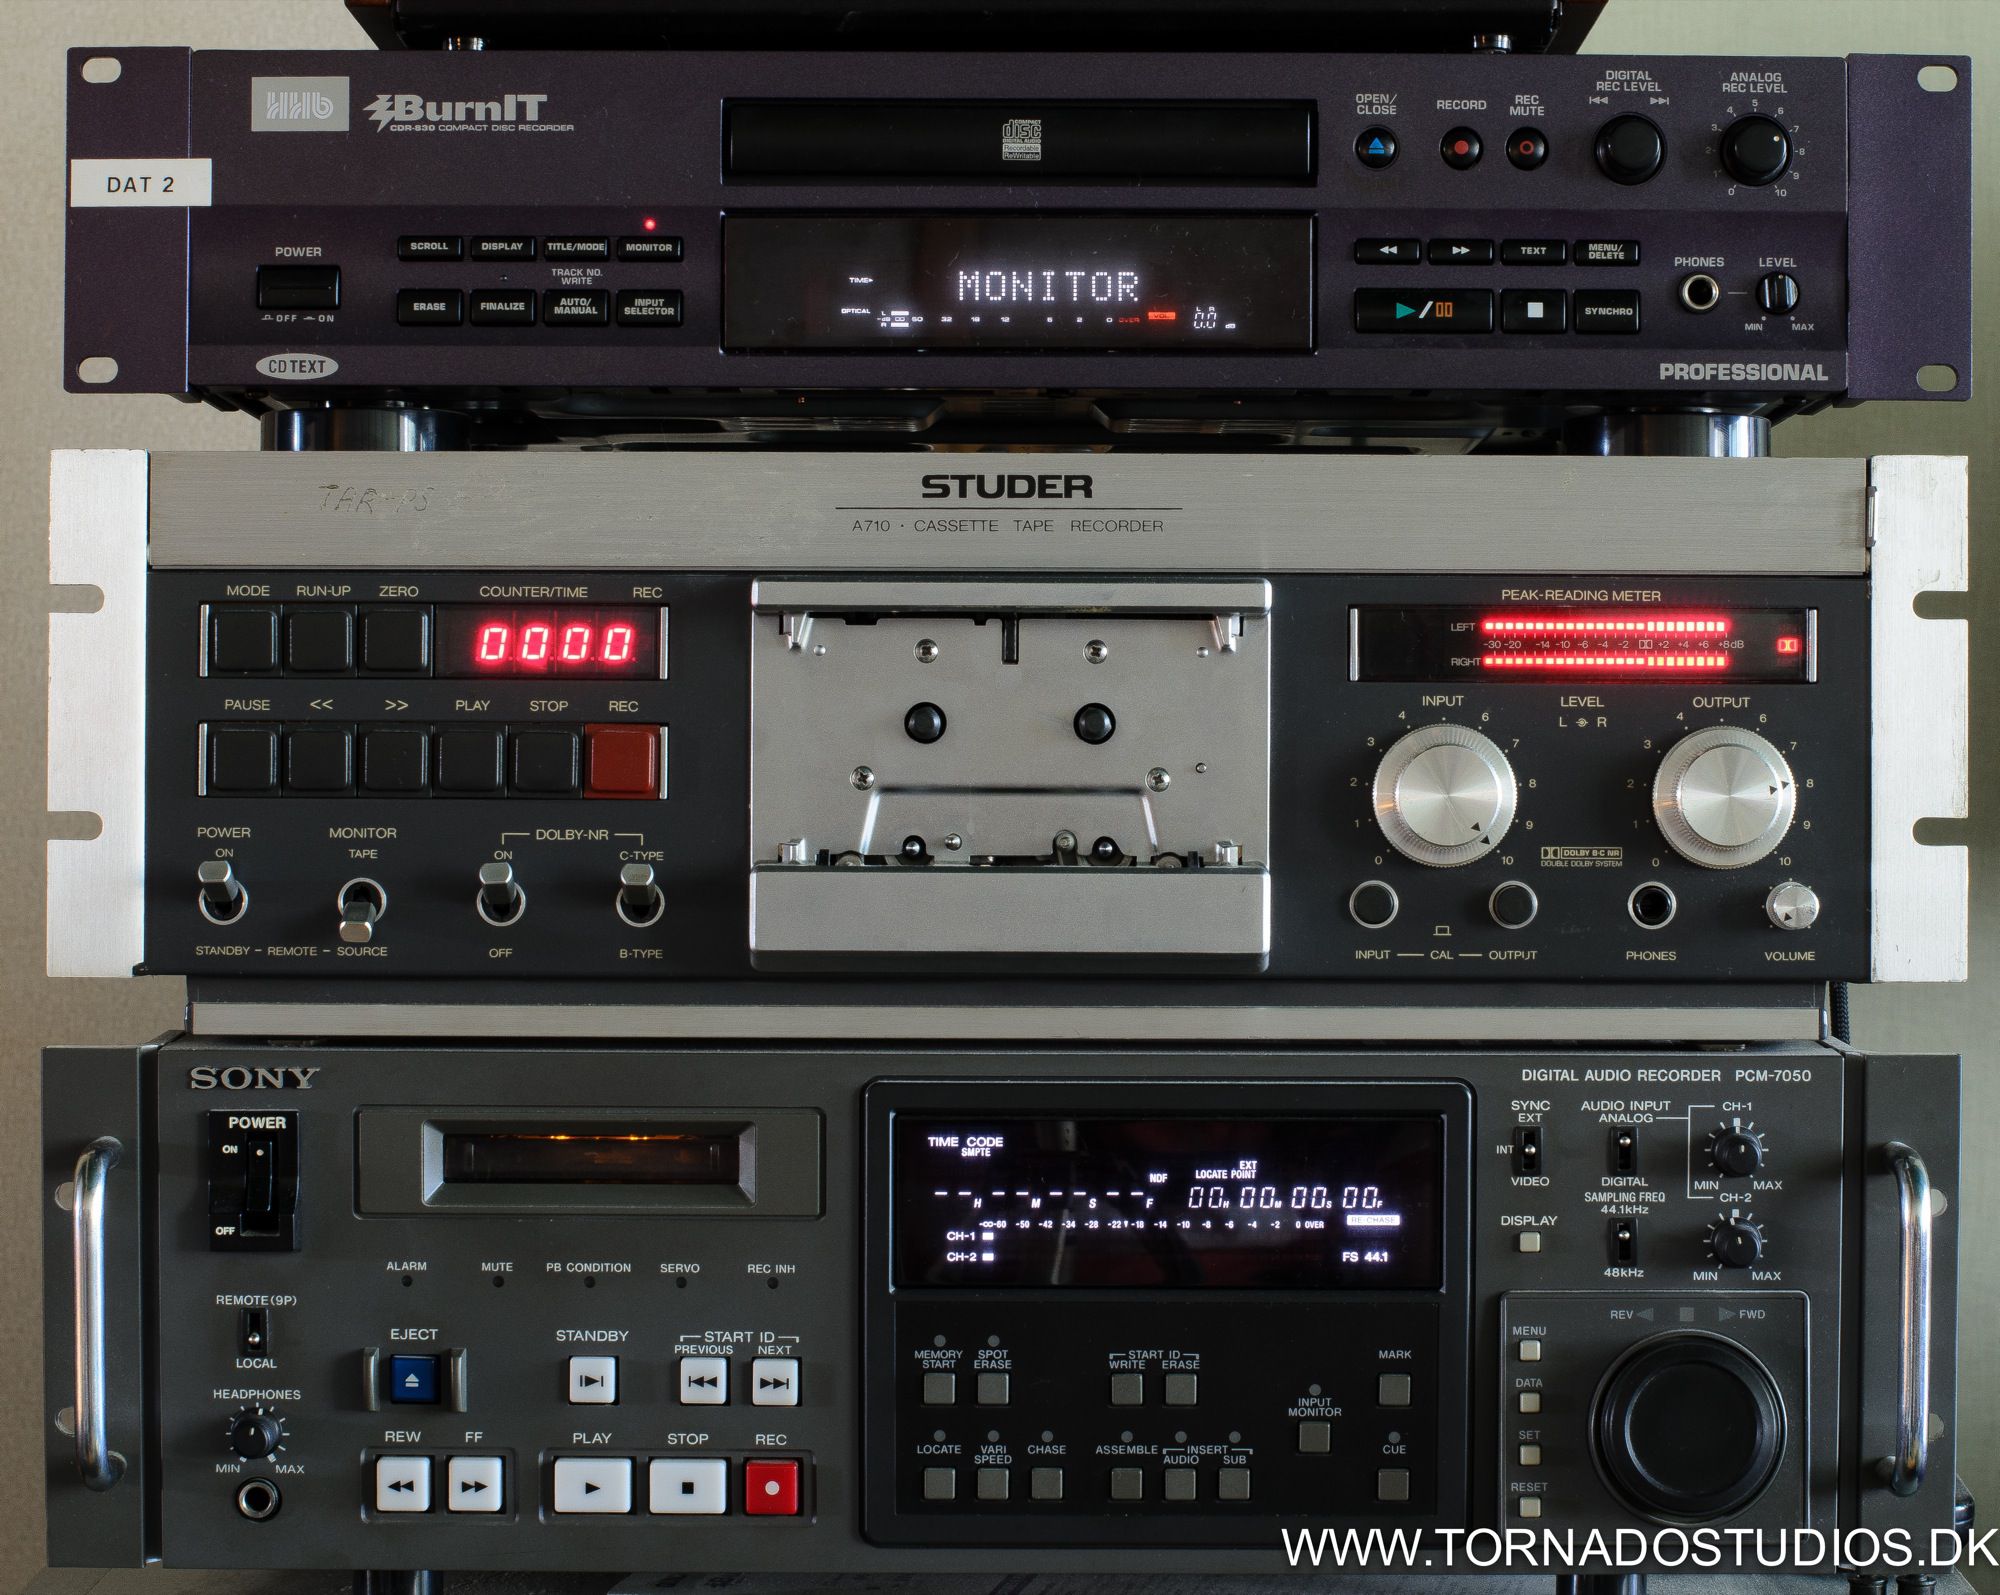 Studer A710 cassette tape recorder